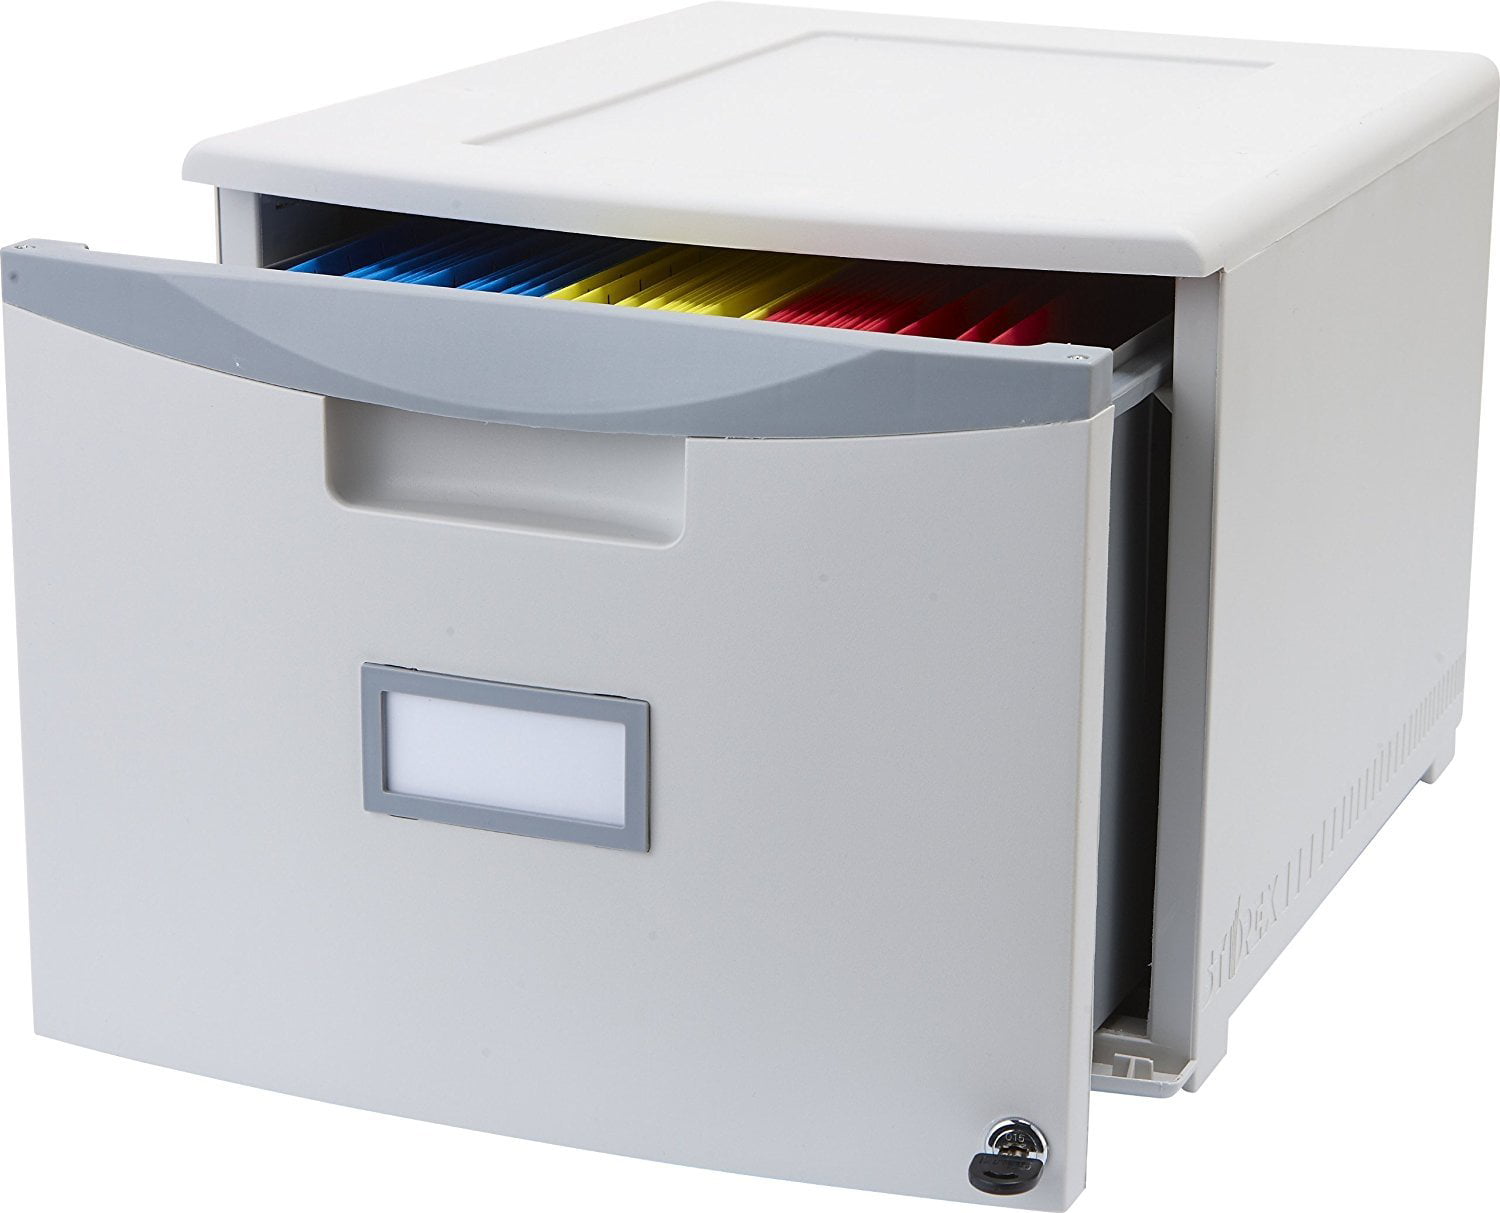 Black Storex Single Drawer Mini File Cabinet with Lock STX61260B01C Legal/Letter 18.25 x 14.75 x 12.75 Inches 